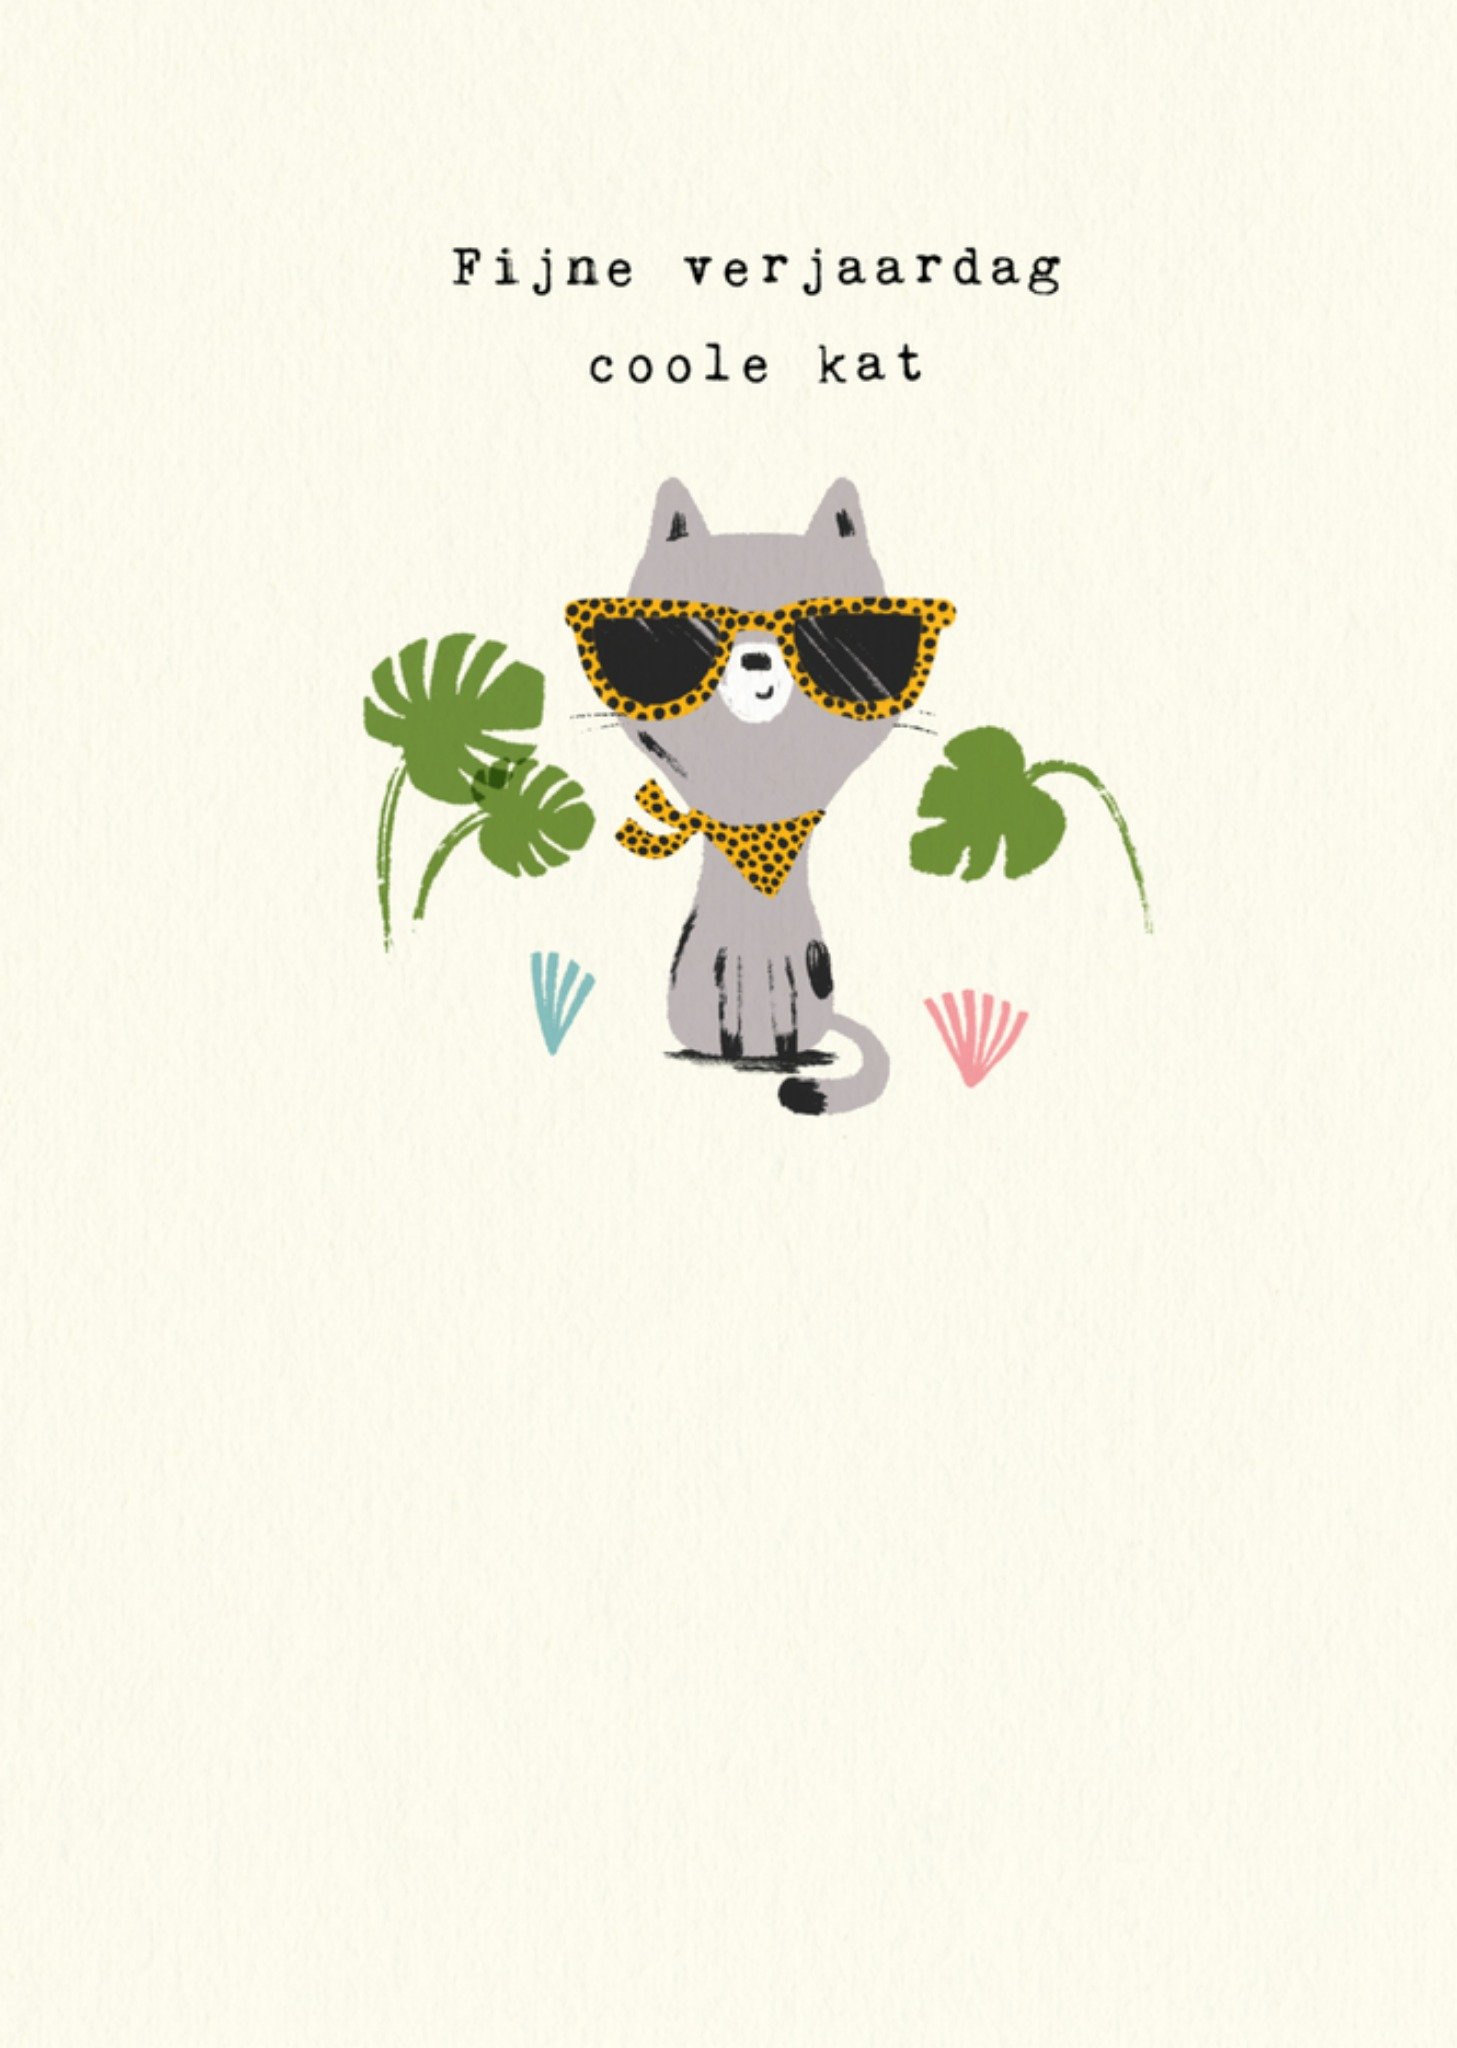 iDrew Illustrations - Verjaardagskaart - coole kat